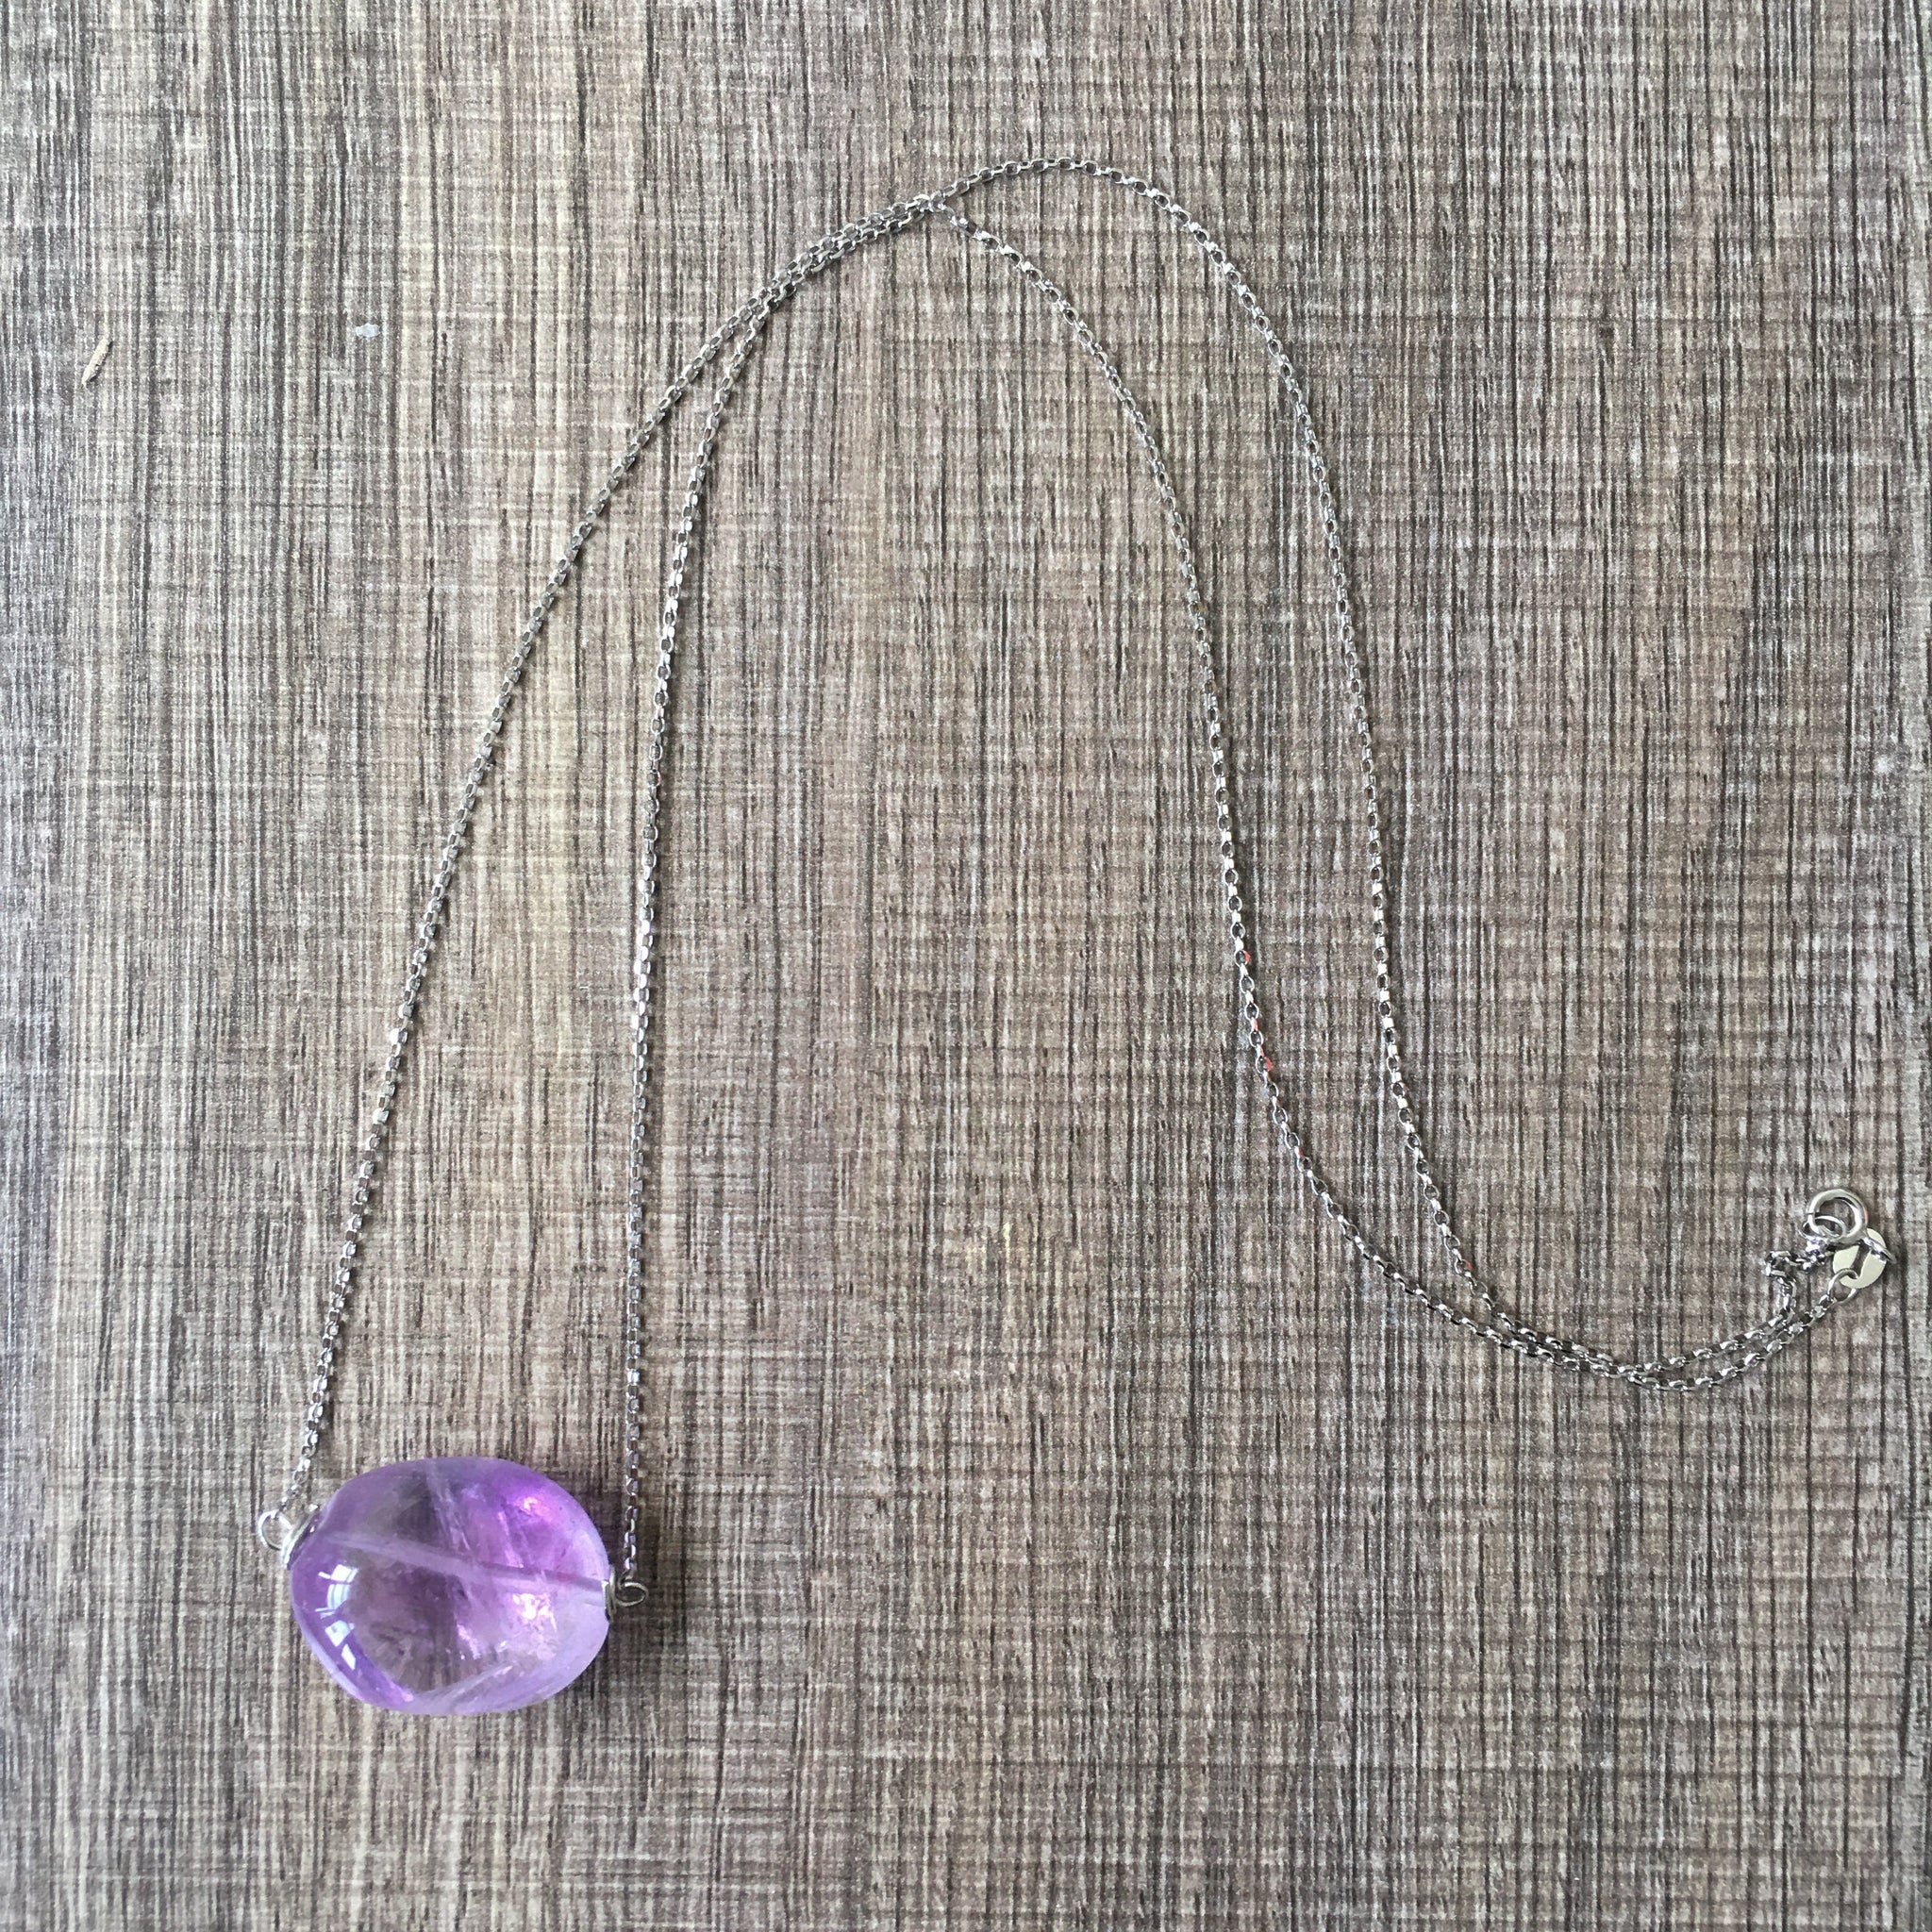 Organic Shaped Amethyst Long Necklace